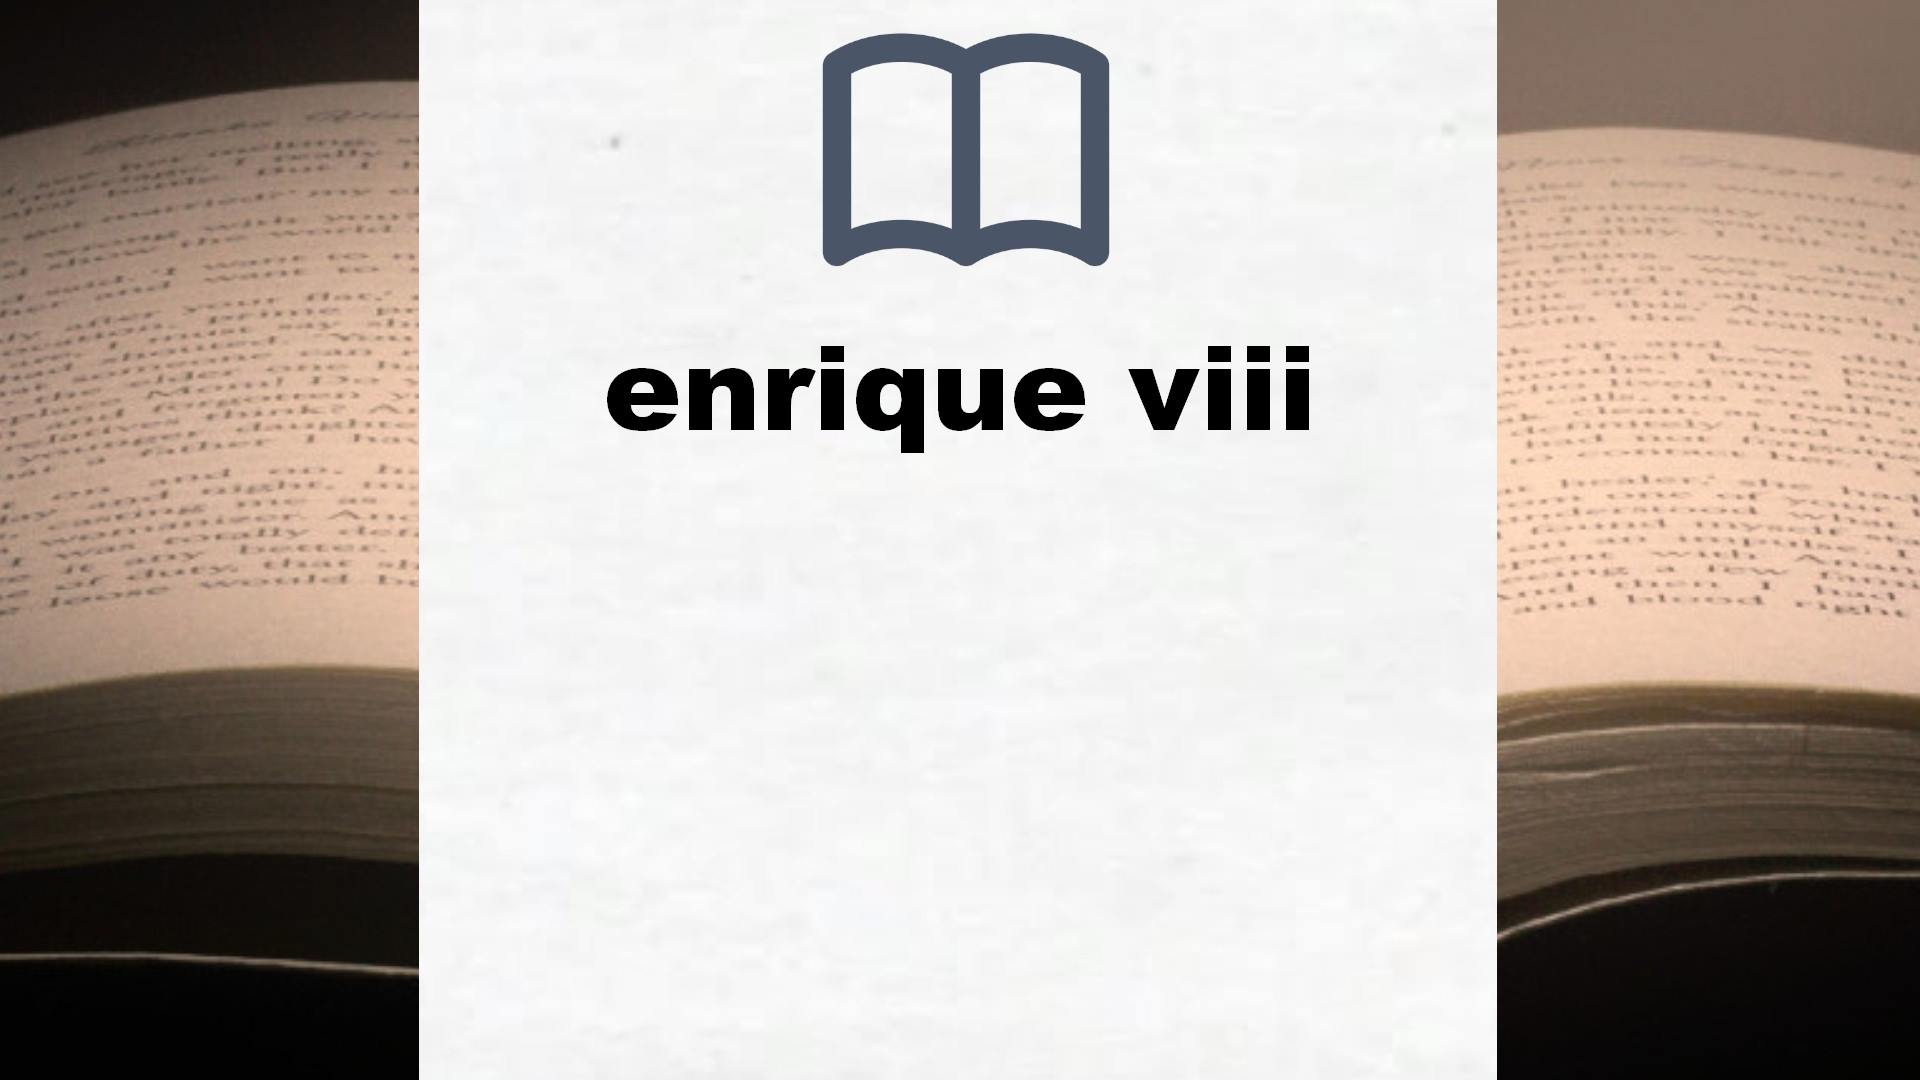 Libros sobre enrique viii